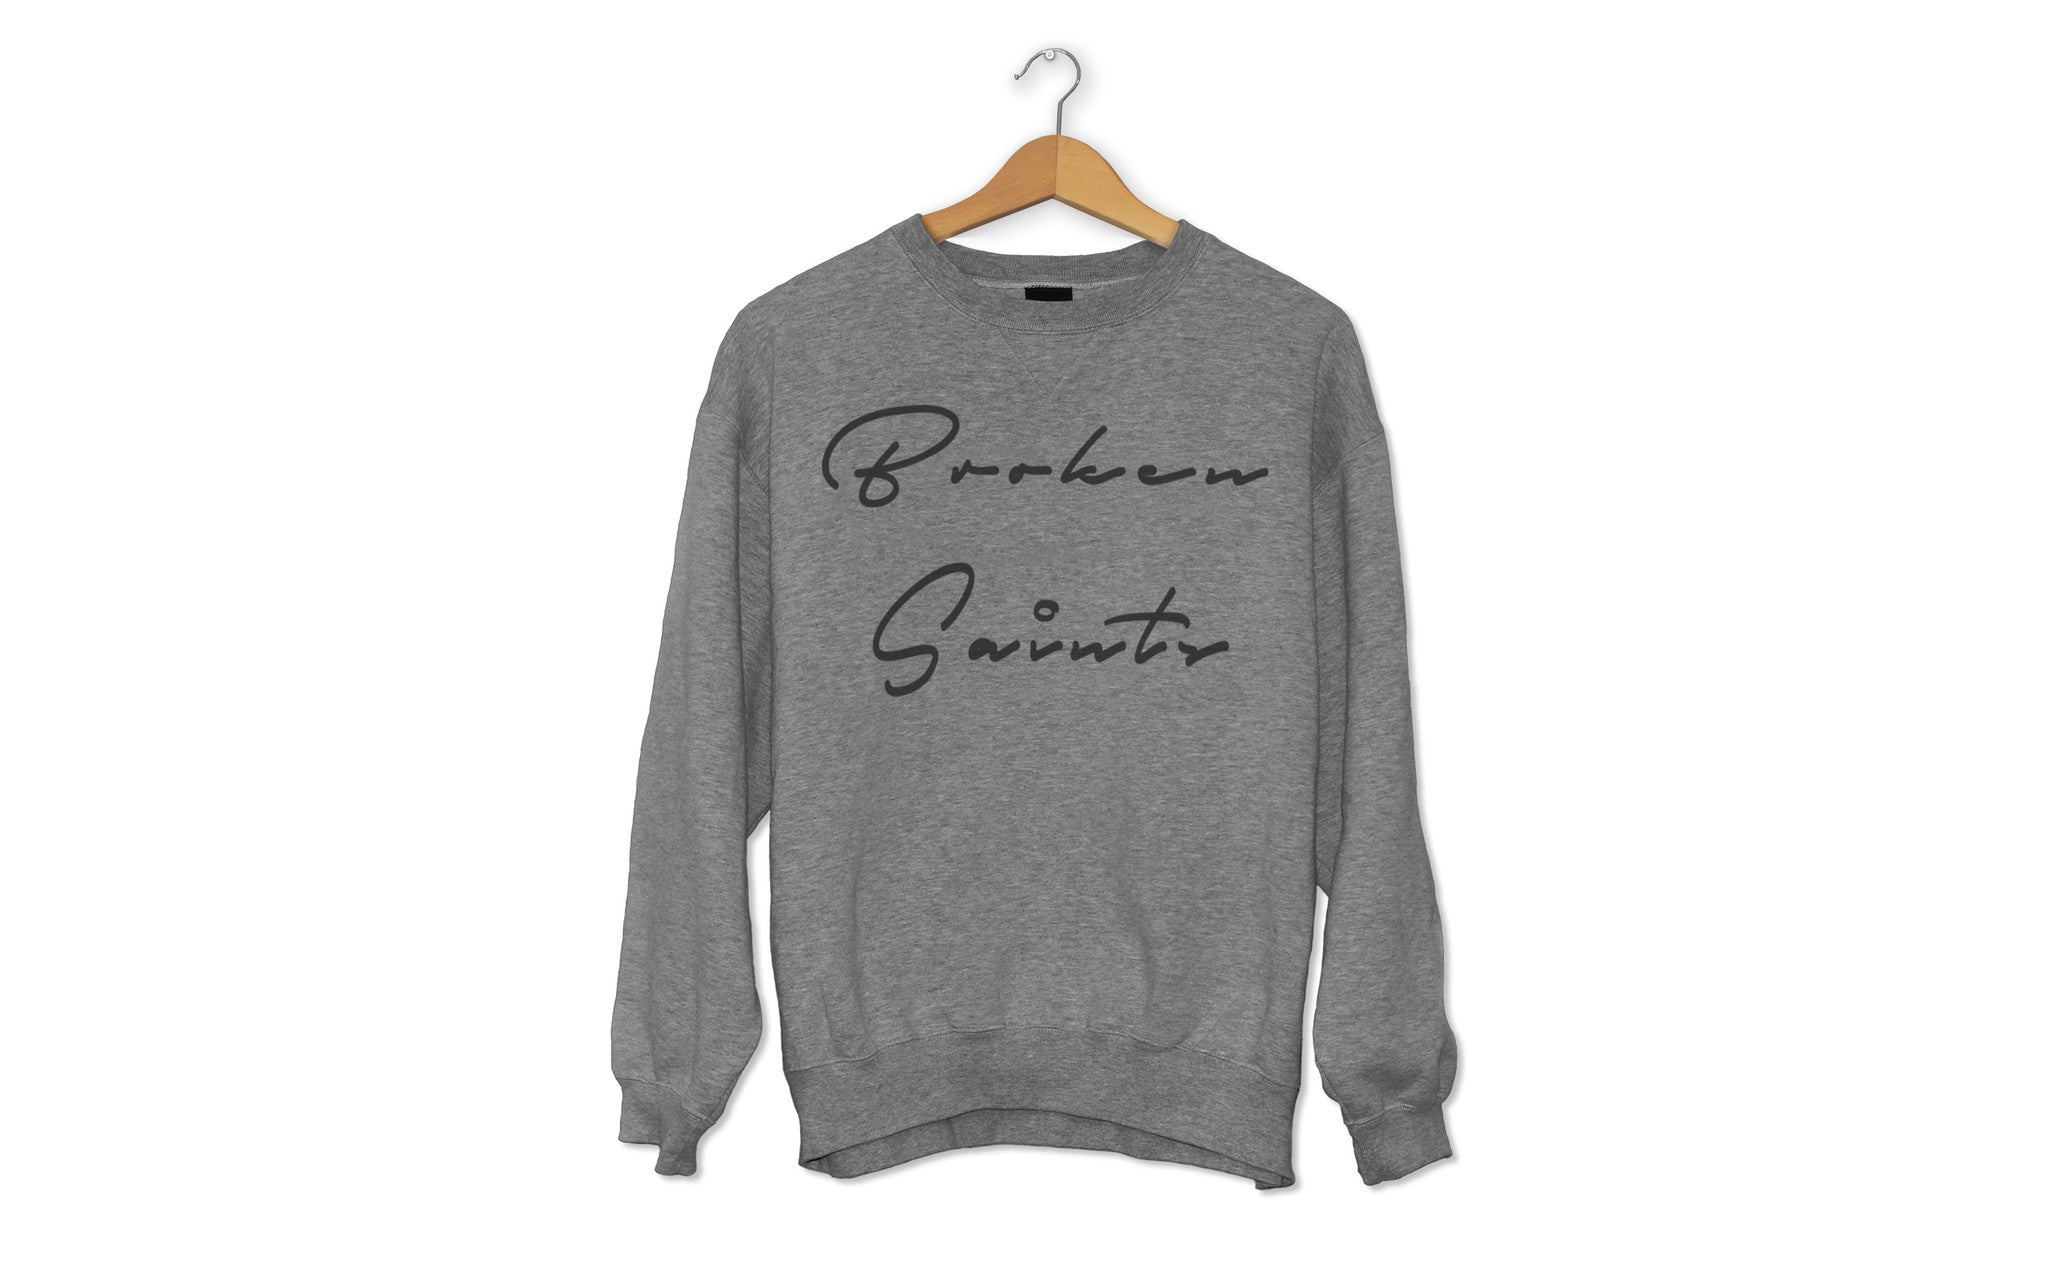 Broken Saints Signature Crewneck Sweaters